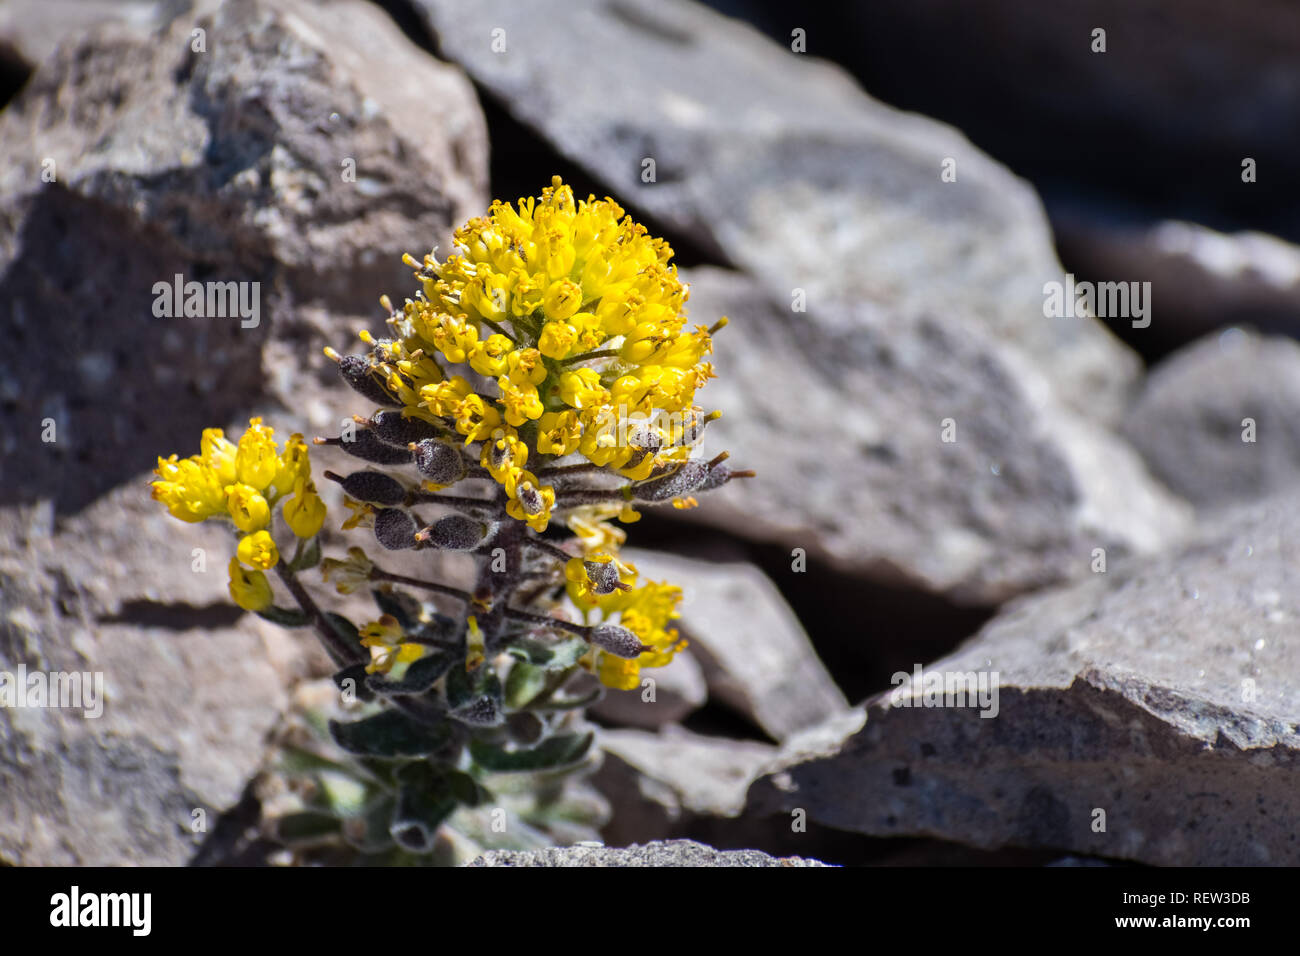 Mt. Lassen draba (Draba aureola) wildflowers blooming among rocks on the high elevation trails of Lassen Volcanic National Park, northern California Stock Photo